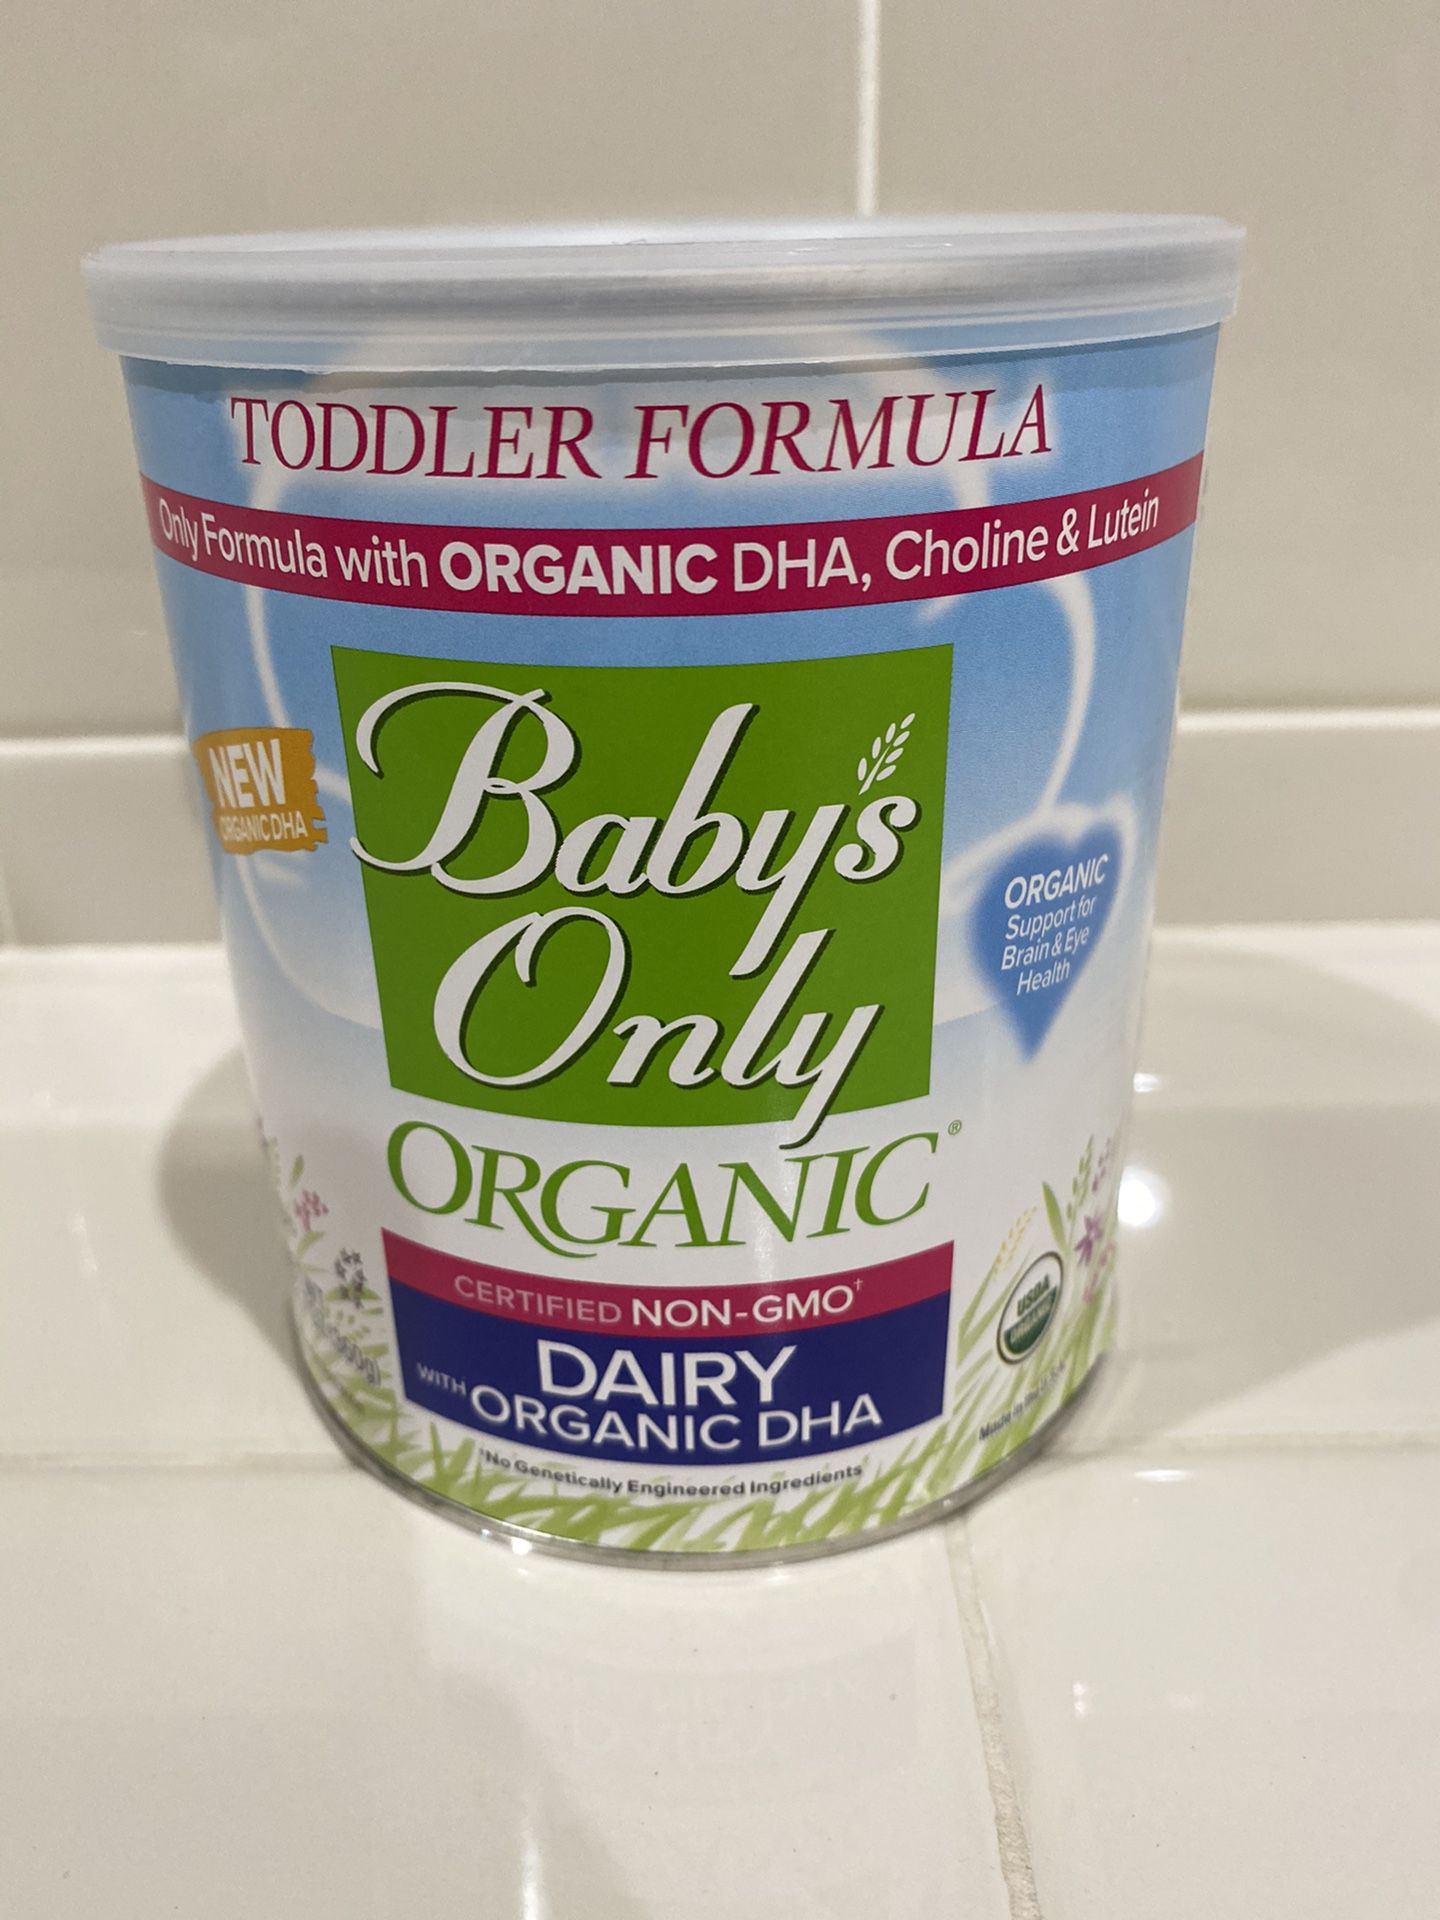 Baby’s Only organic toddler formula sealed 3x original size